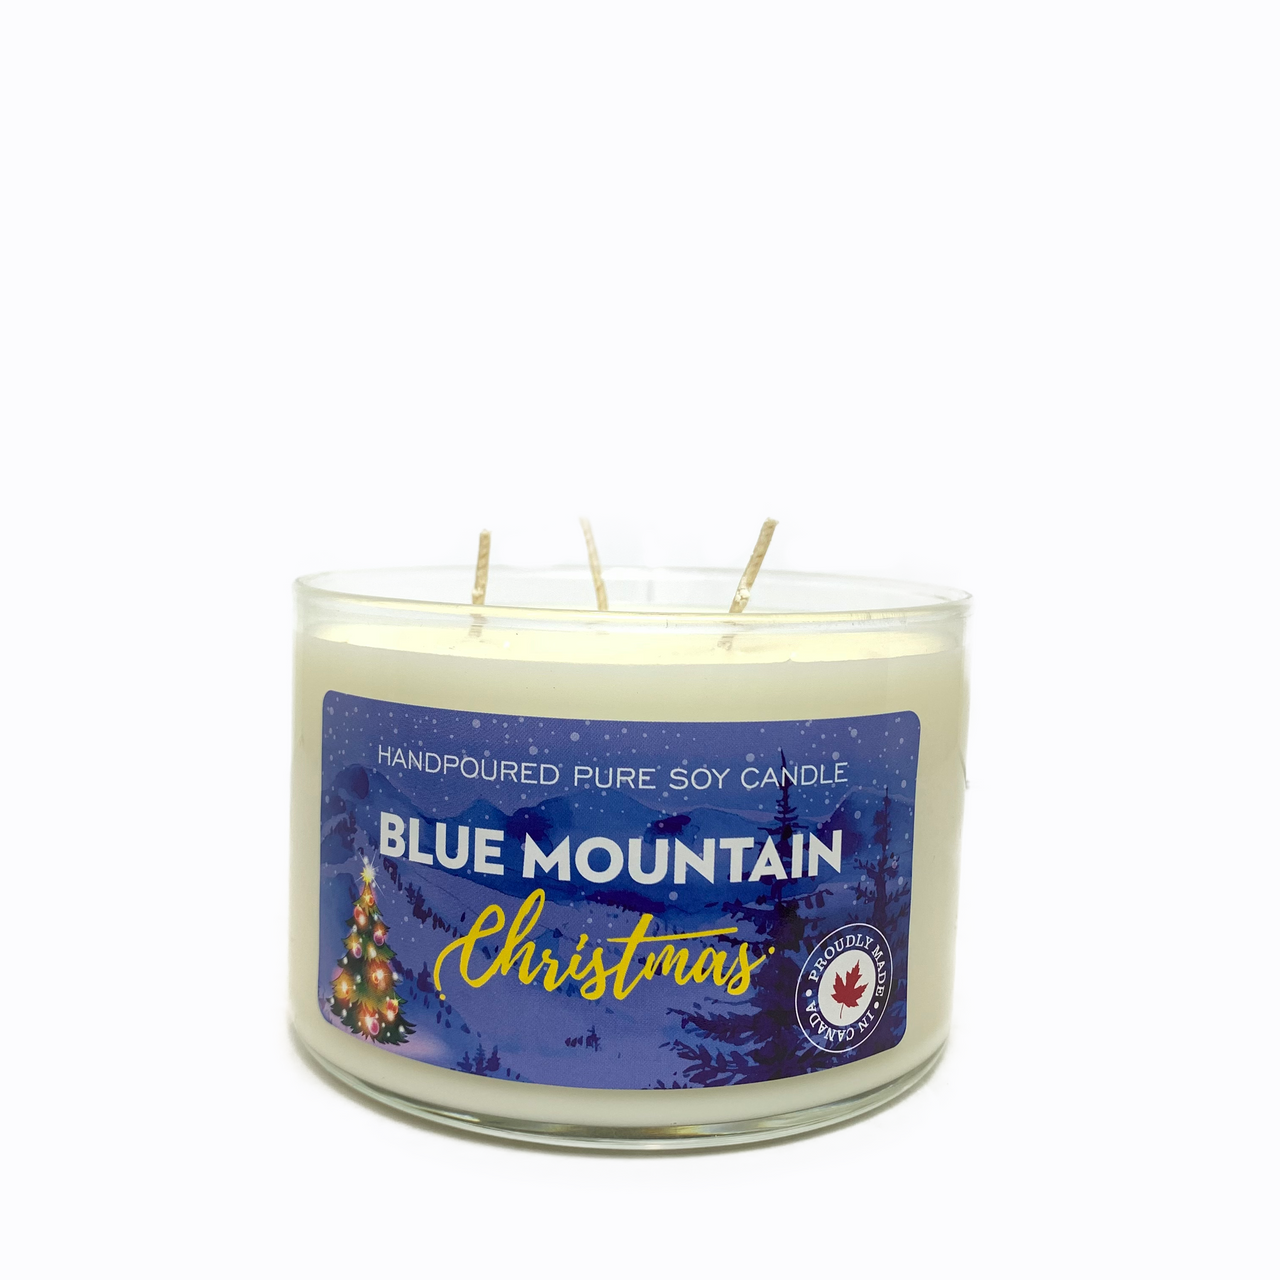 Blue Mountain Christmas- 3 wick